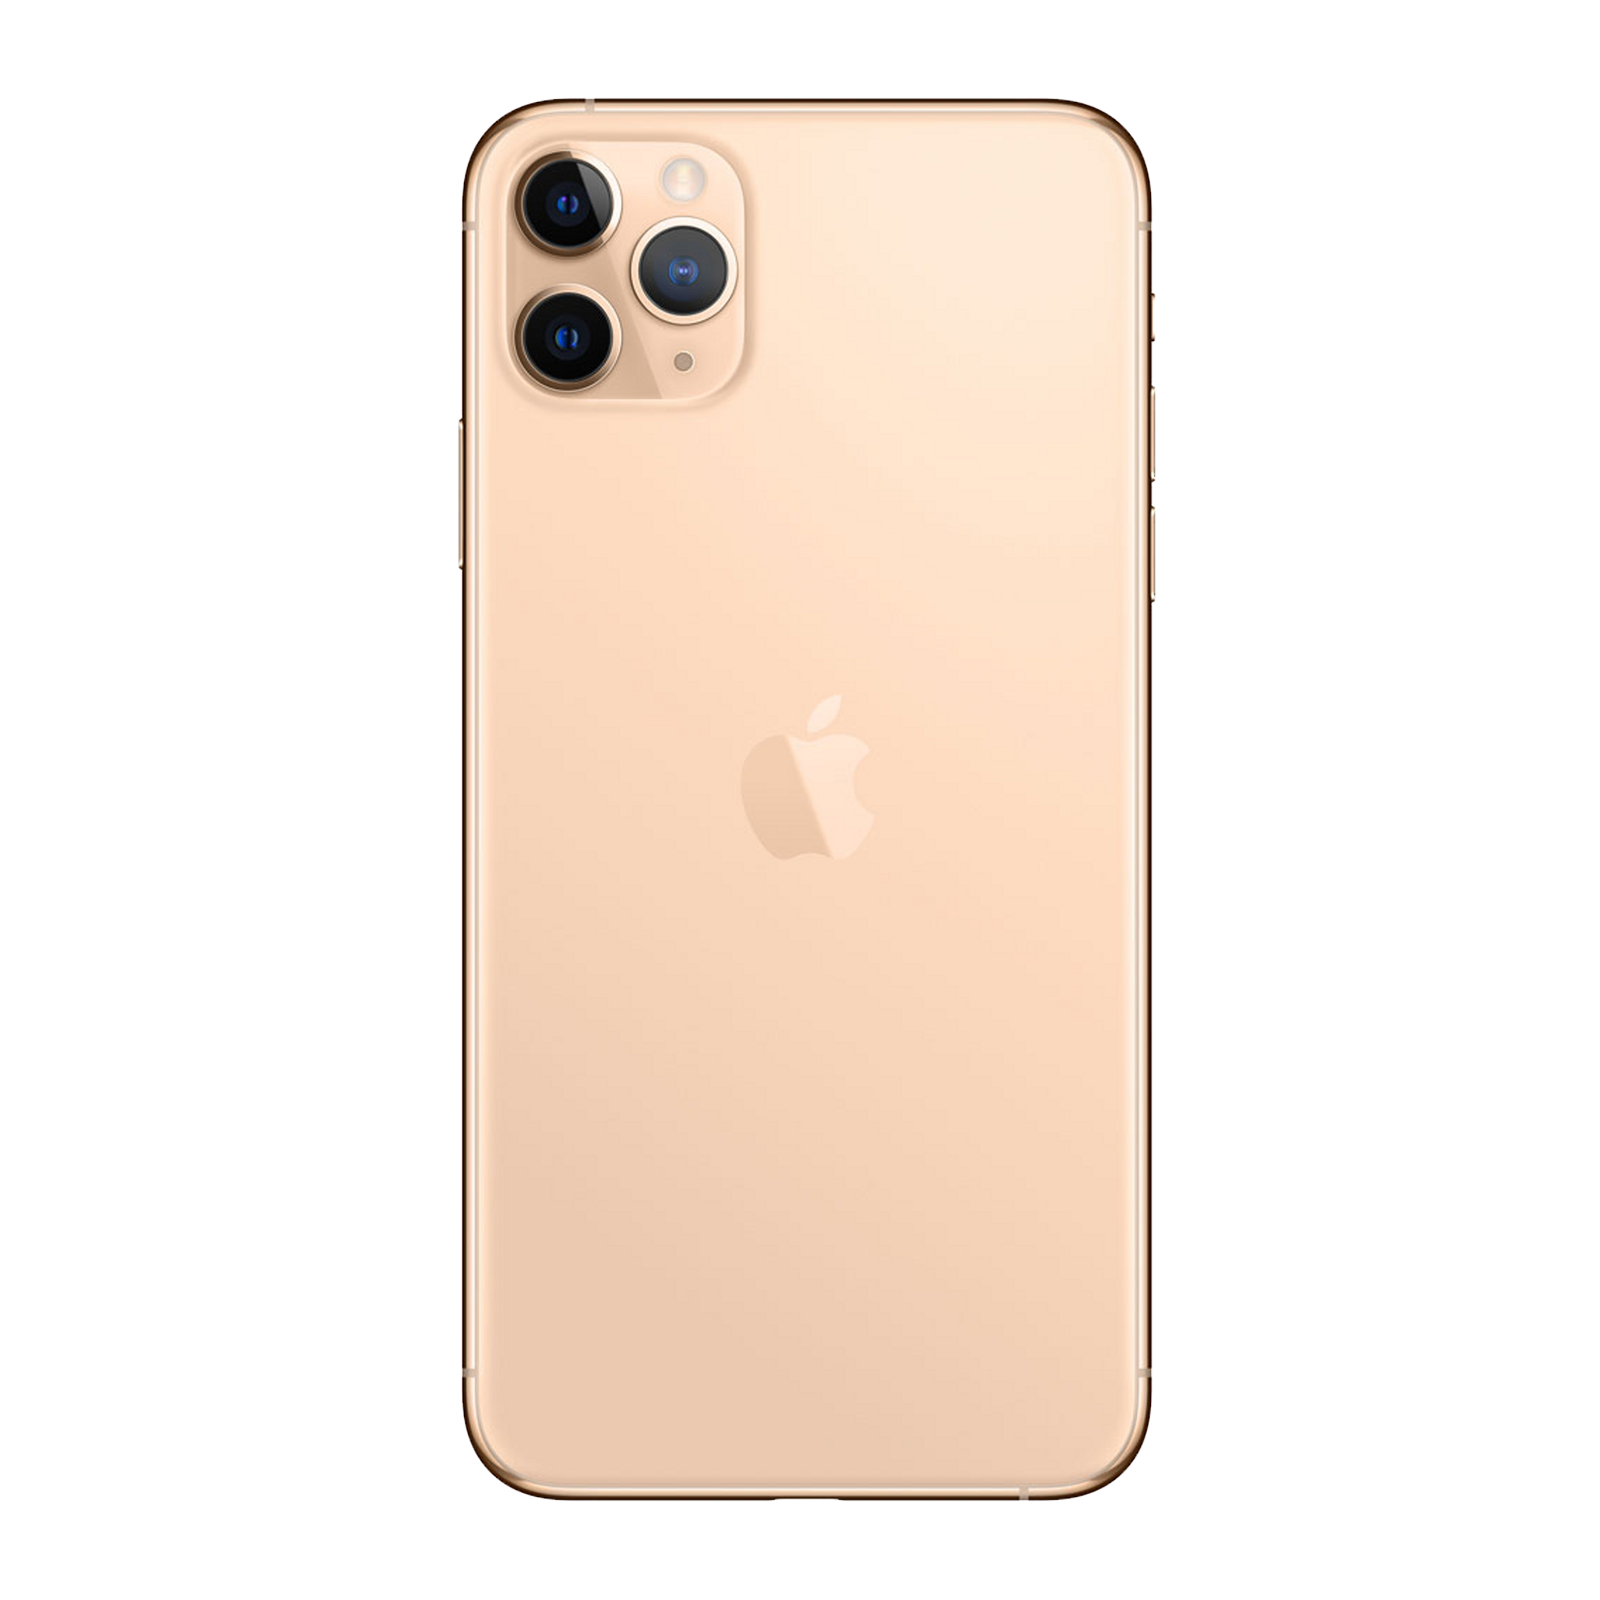 Apple iPhone 11 Pro Max 512GB Gold Pristine - Sprint